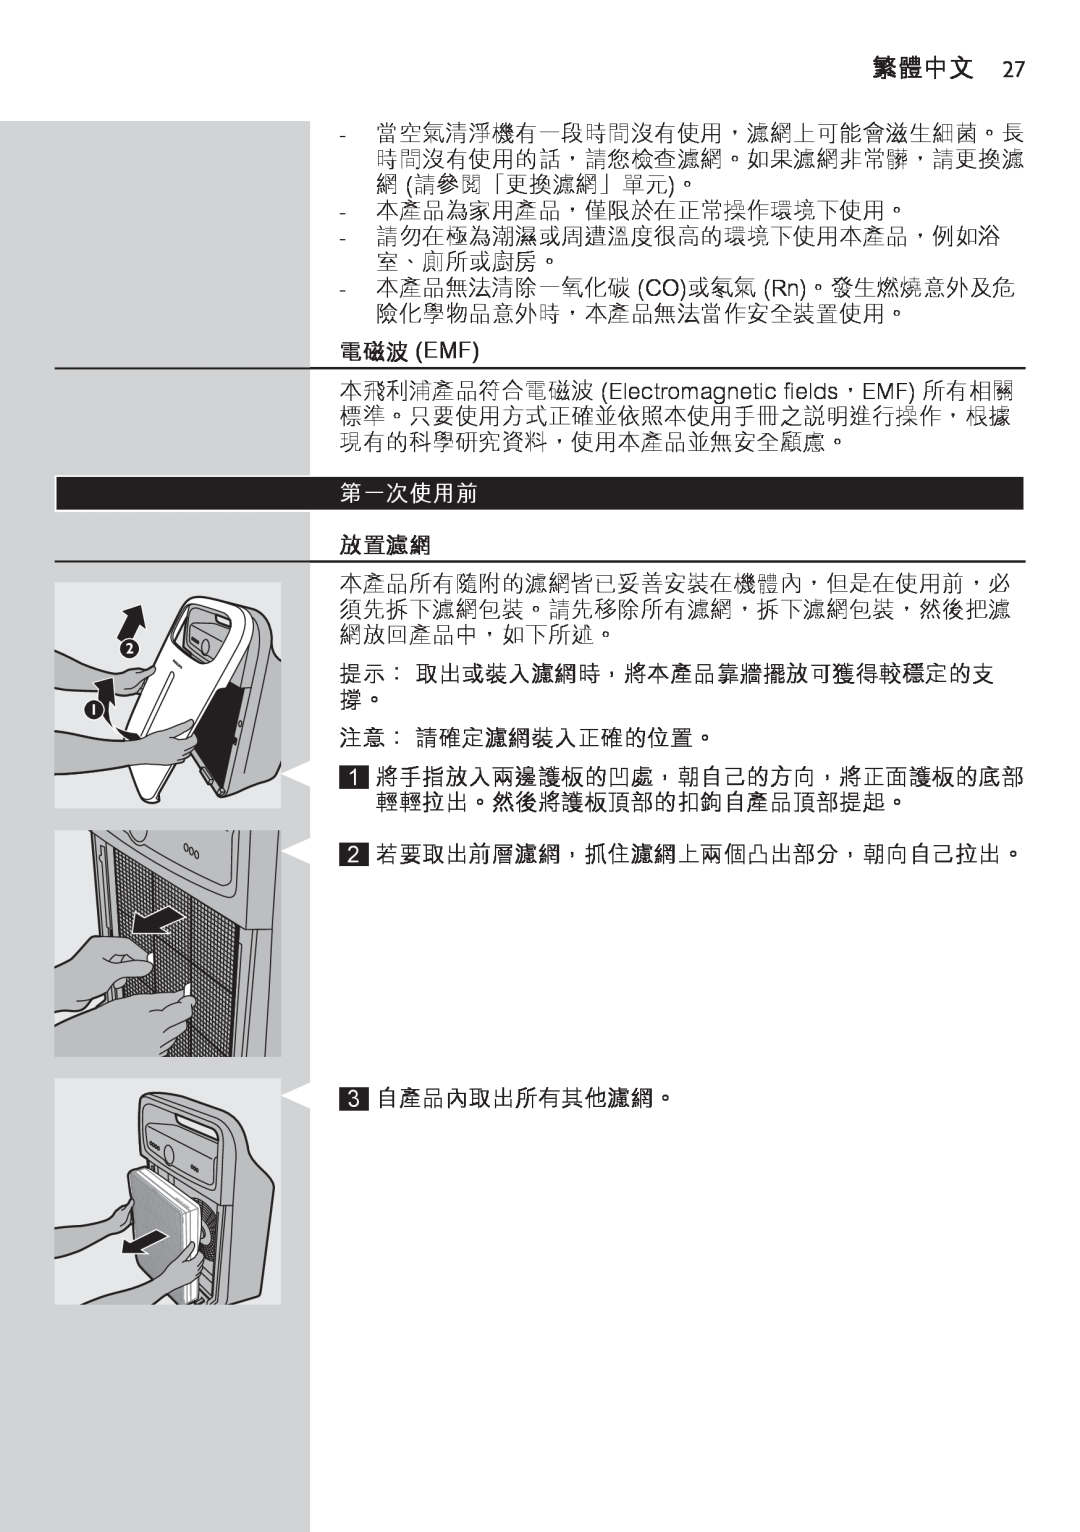 Philips AC4002 manual 電磁波 Emf, 第一次使用前, 放置濾網, 繁體中文 